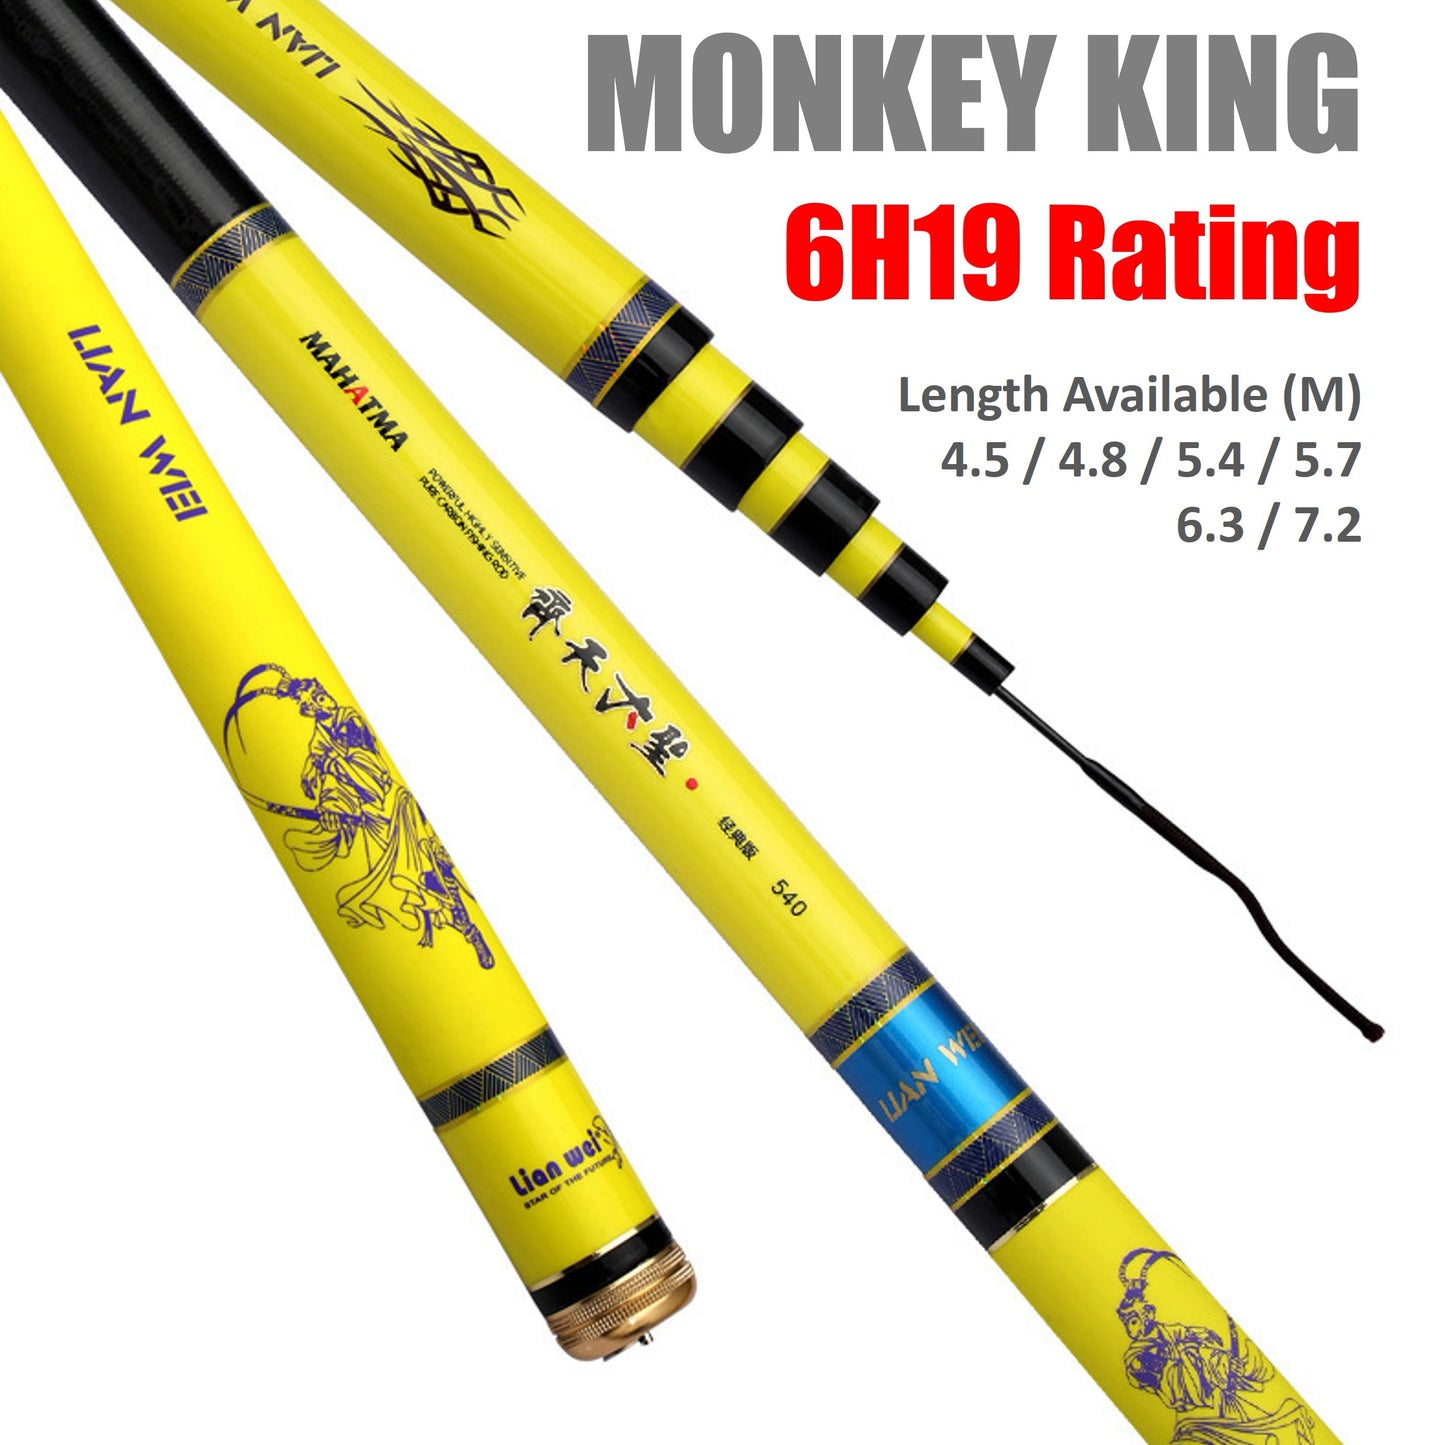 Monkey King Pole Rod 6H19 Rating PR013